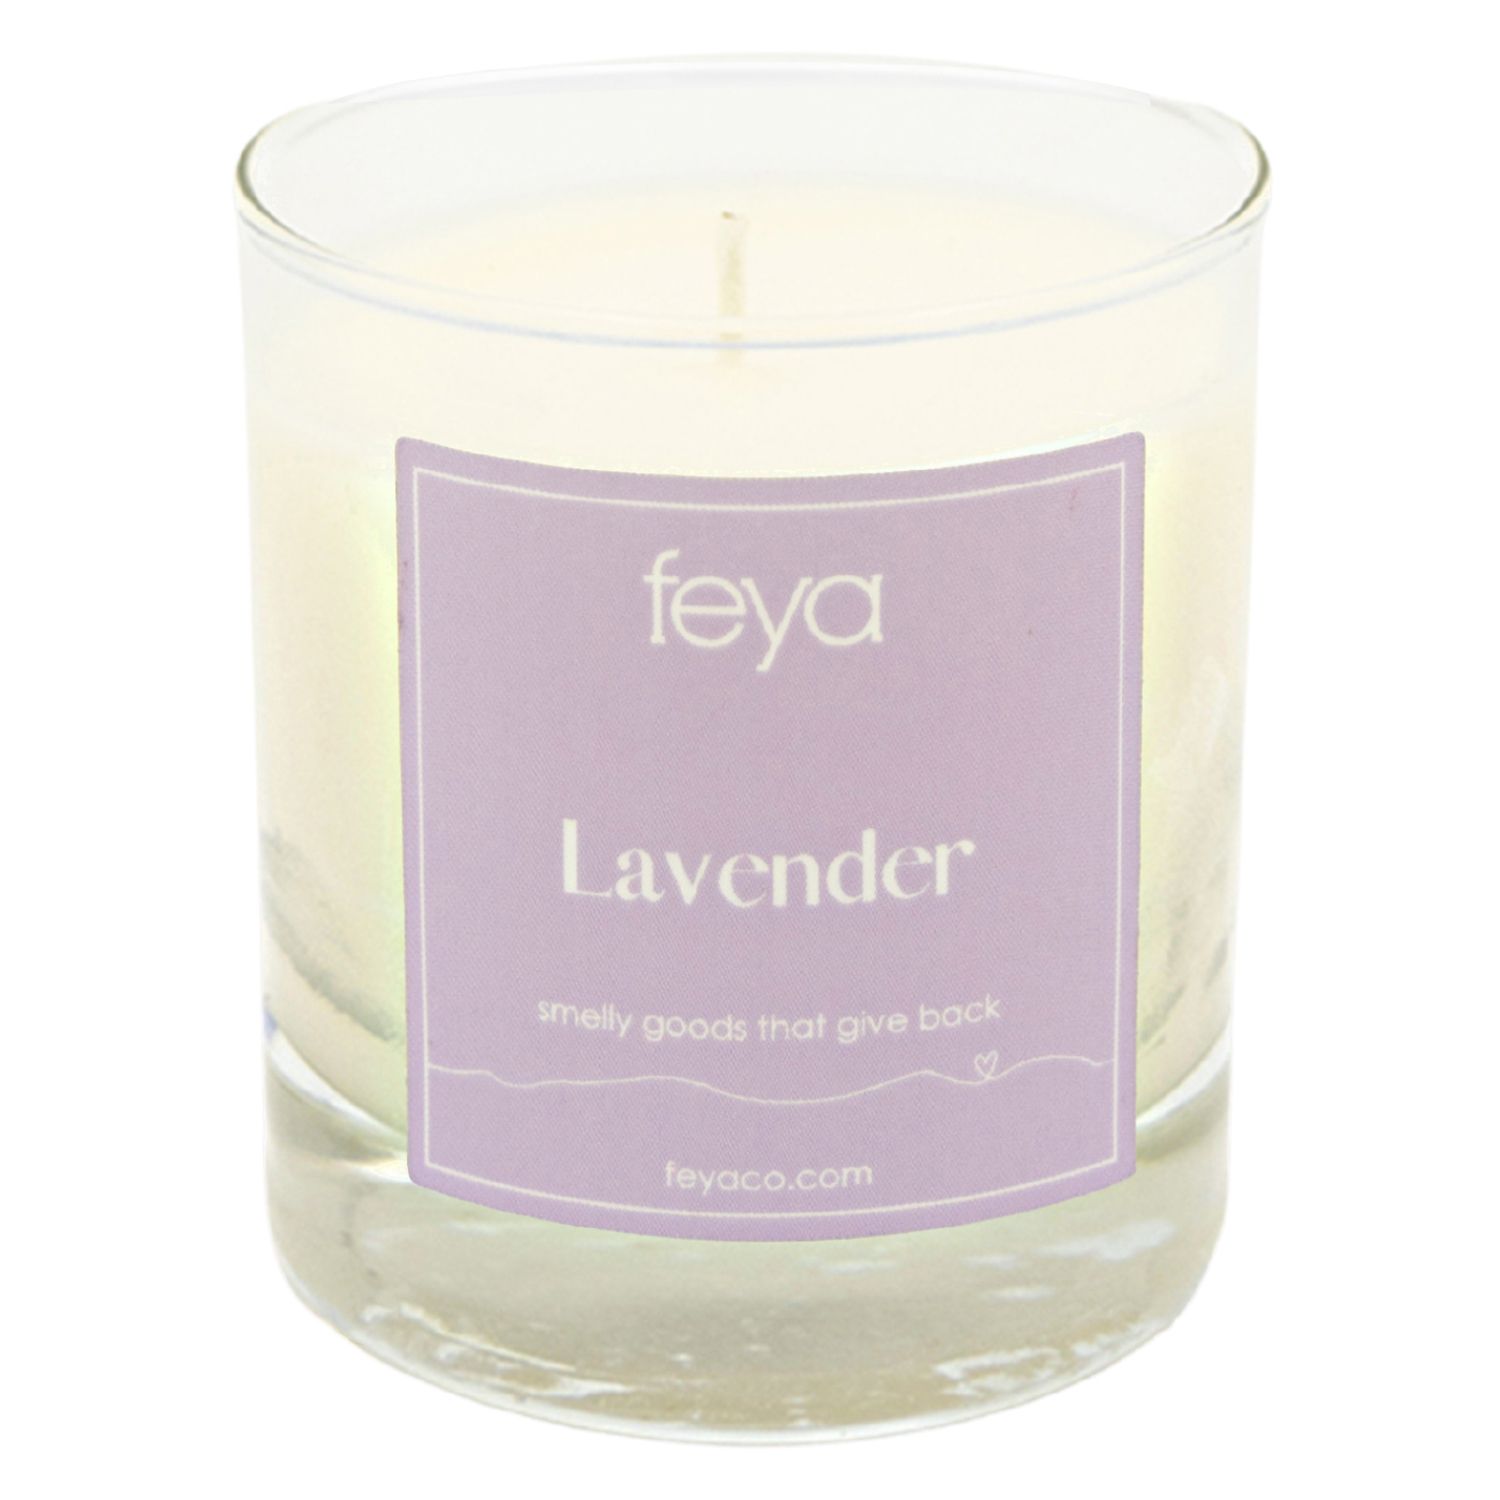 Свечи Feya Lavender, 6,5 унций. Соевая восковая свеча vahine figure candle number 8